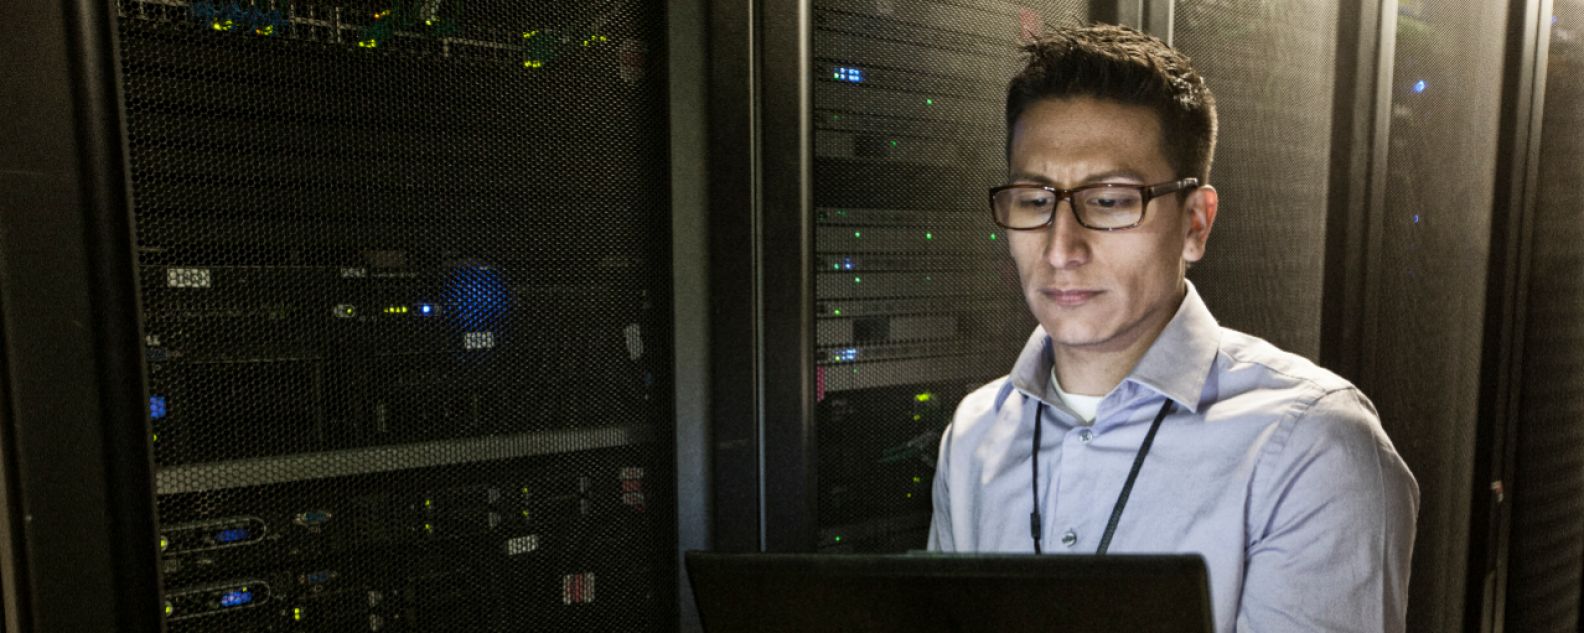 Hispanic man technician doing diagnostic tests on computer servers